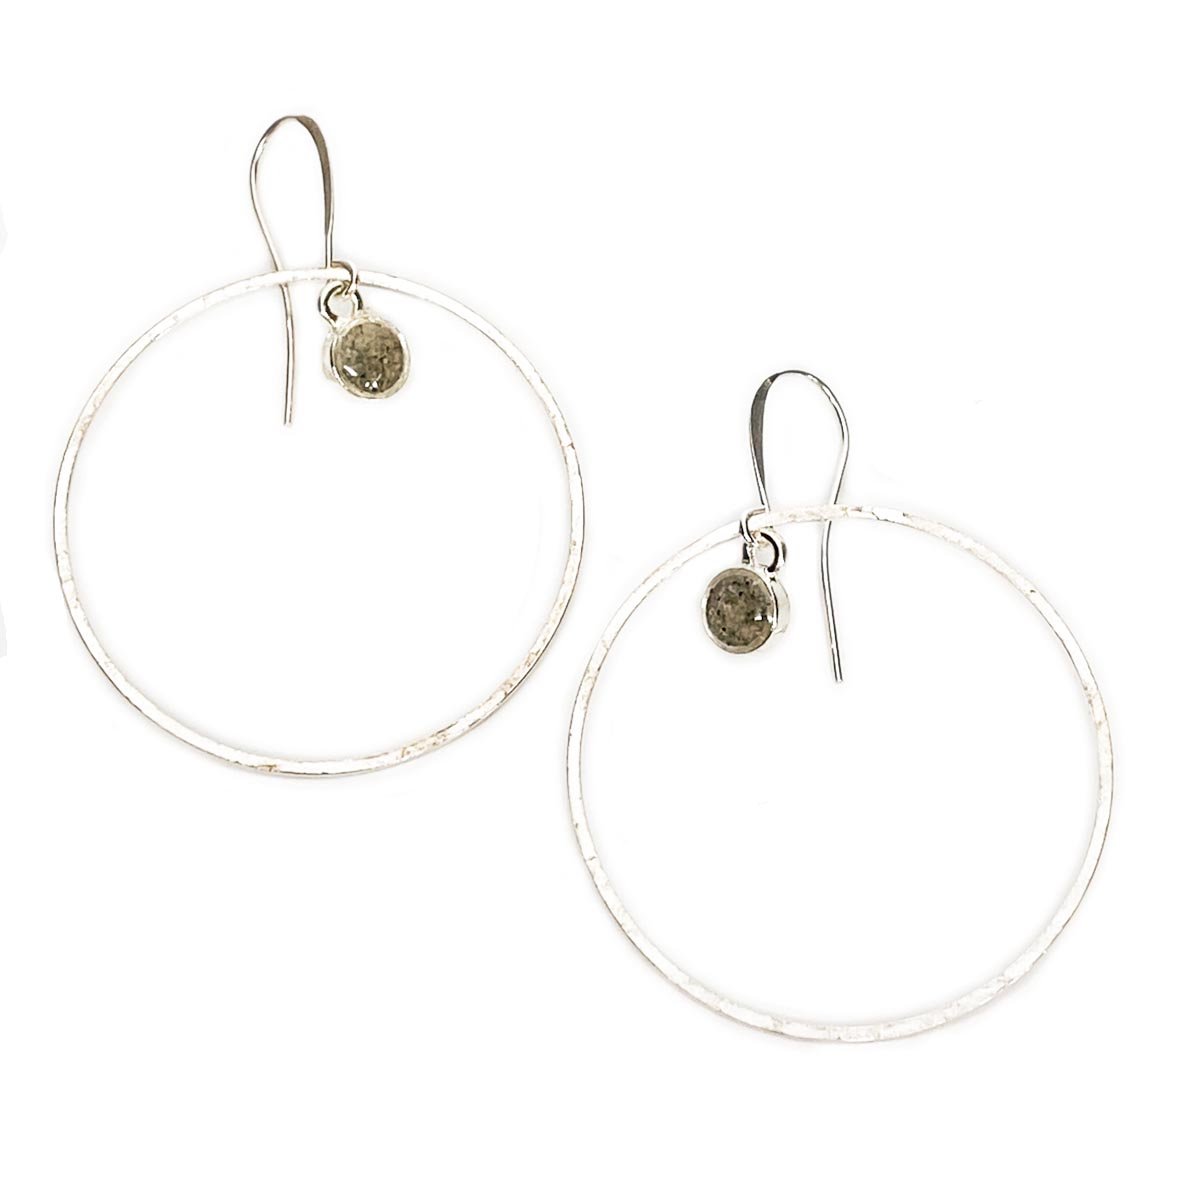 Hoop Drop Earrings – Beachdashery® Jewelry